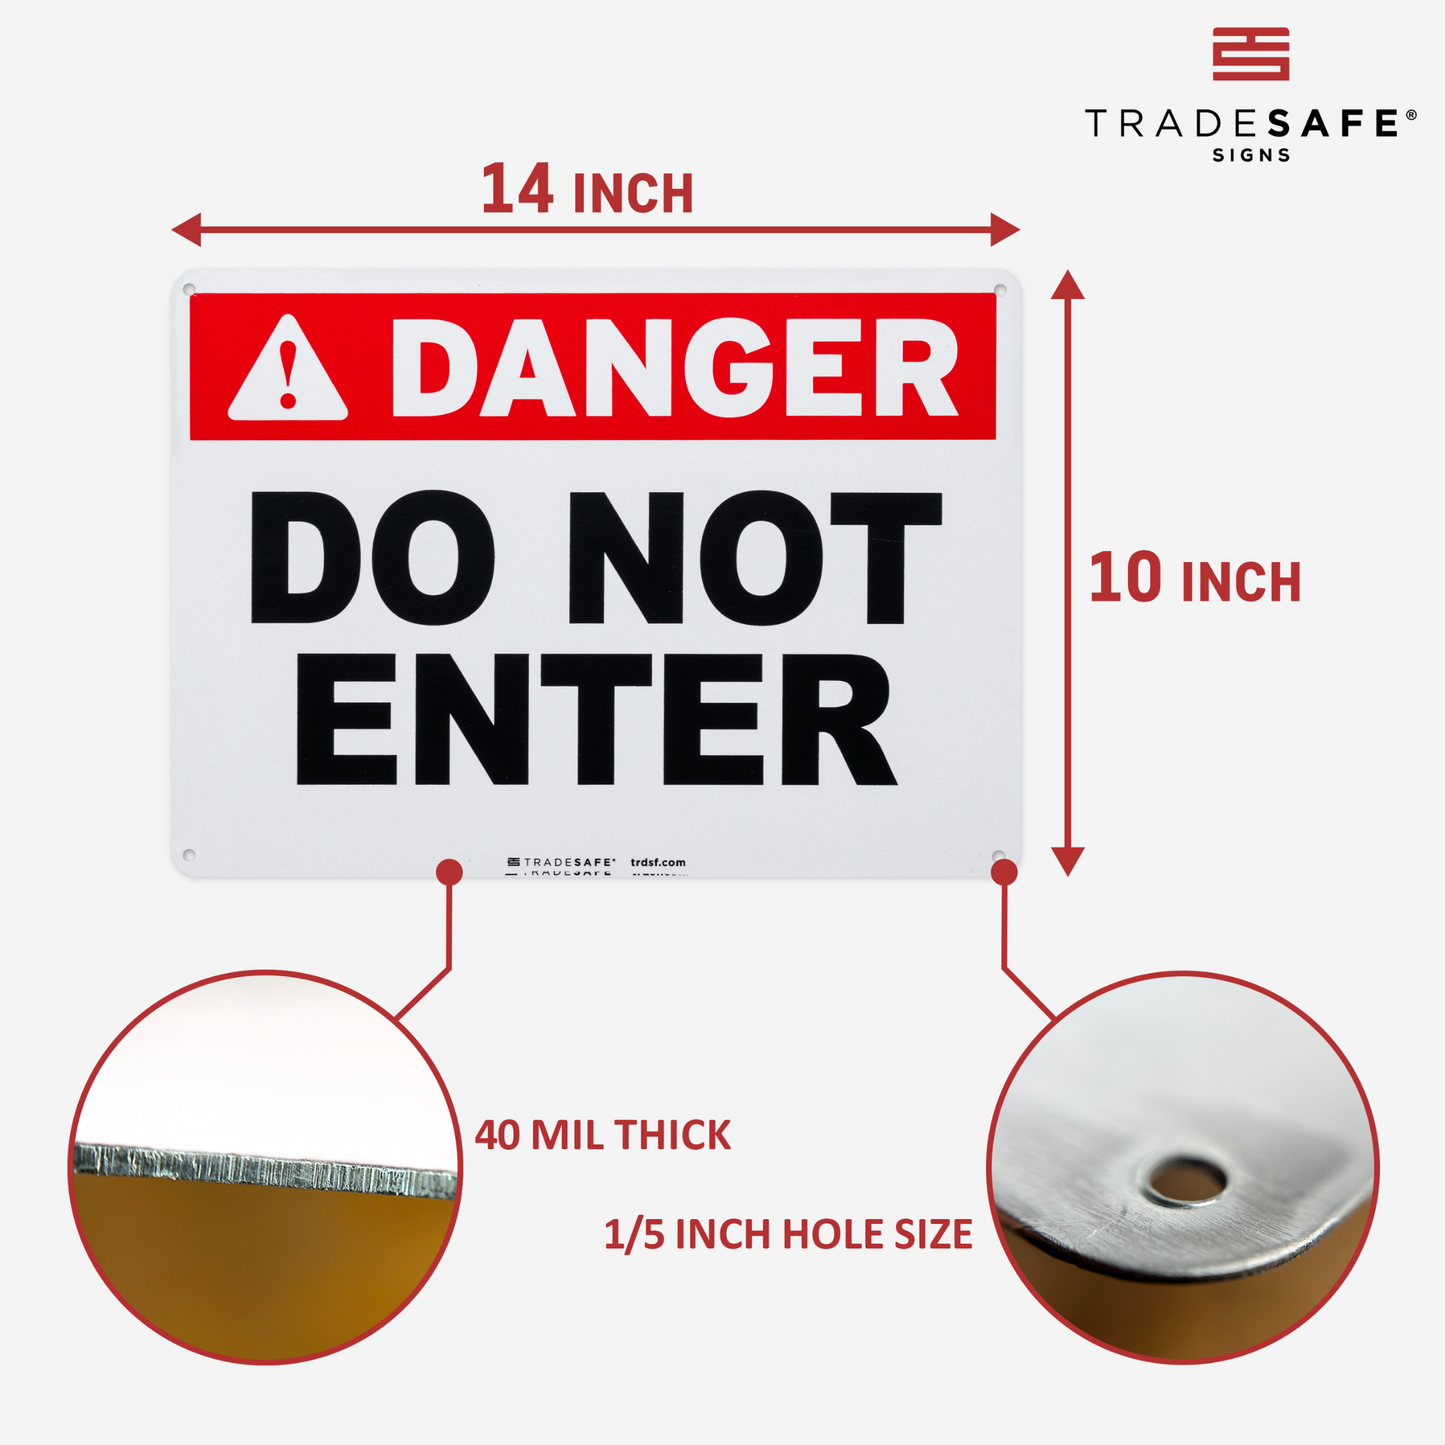 dimensions of danger do not enter sign